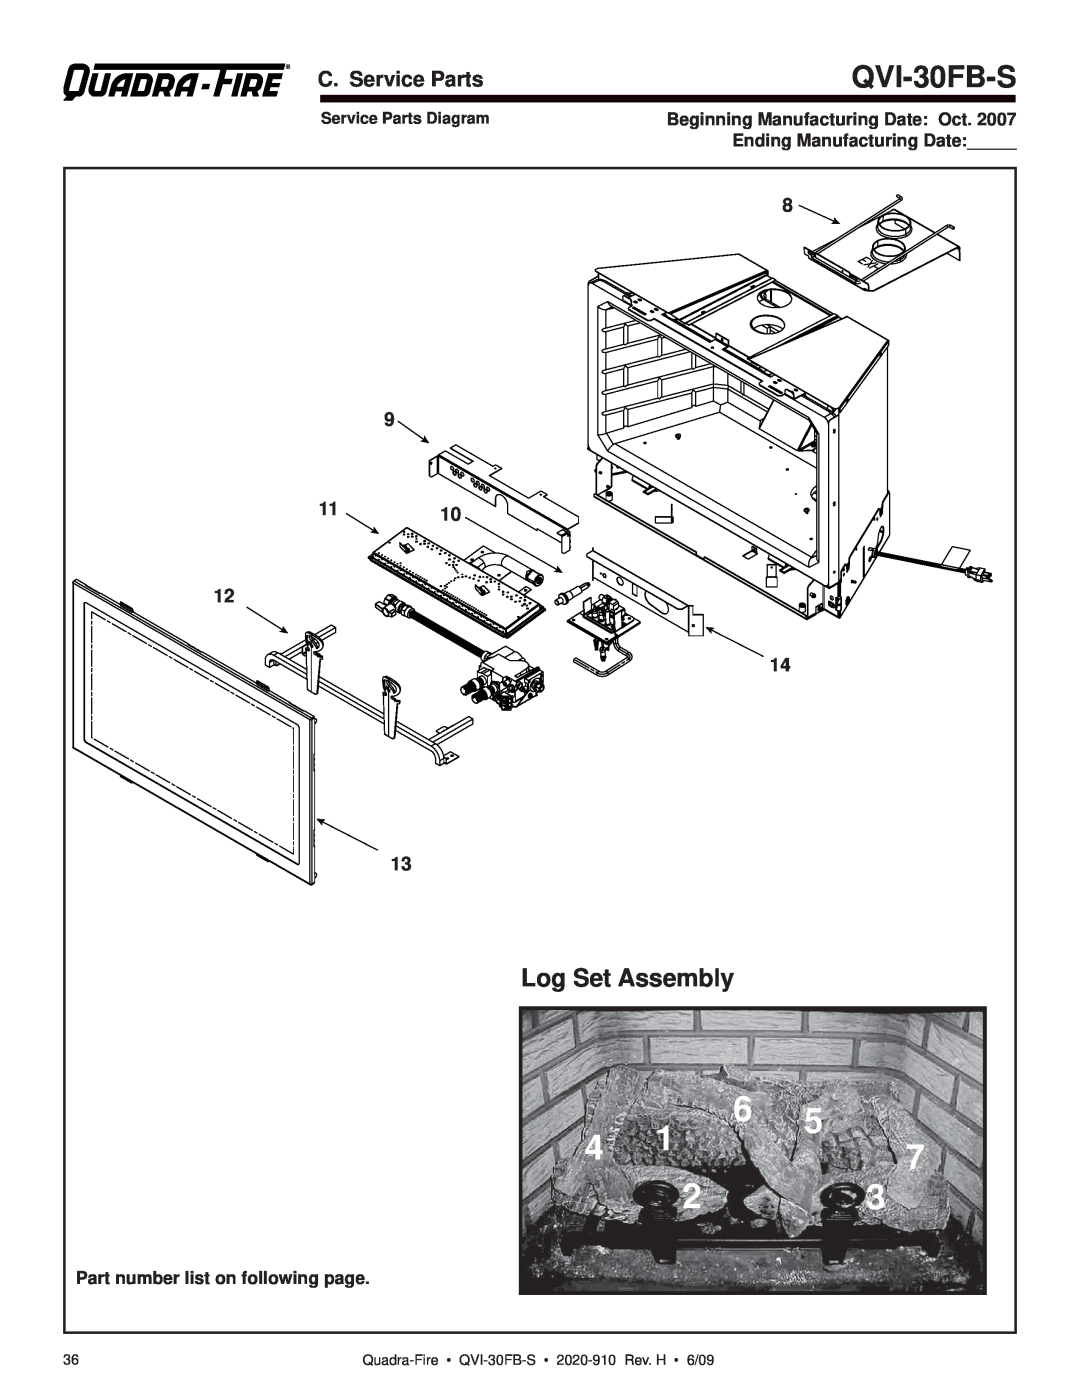 Quadra-Fire QVI-30FB-S owner manual Log Set Assembly, C. Service Parts, 8 9 11 12, Service Parts Diagram 